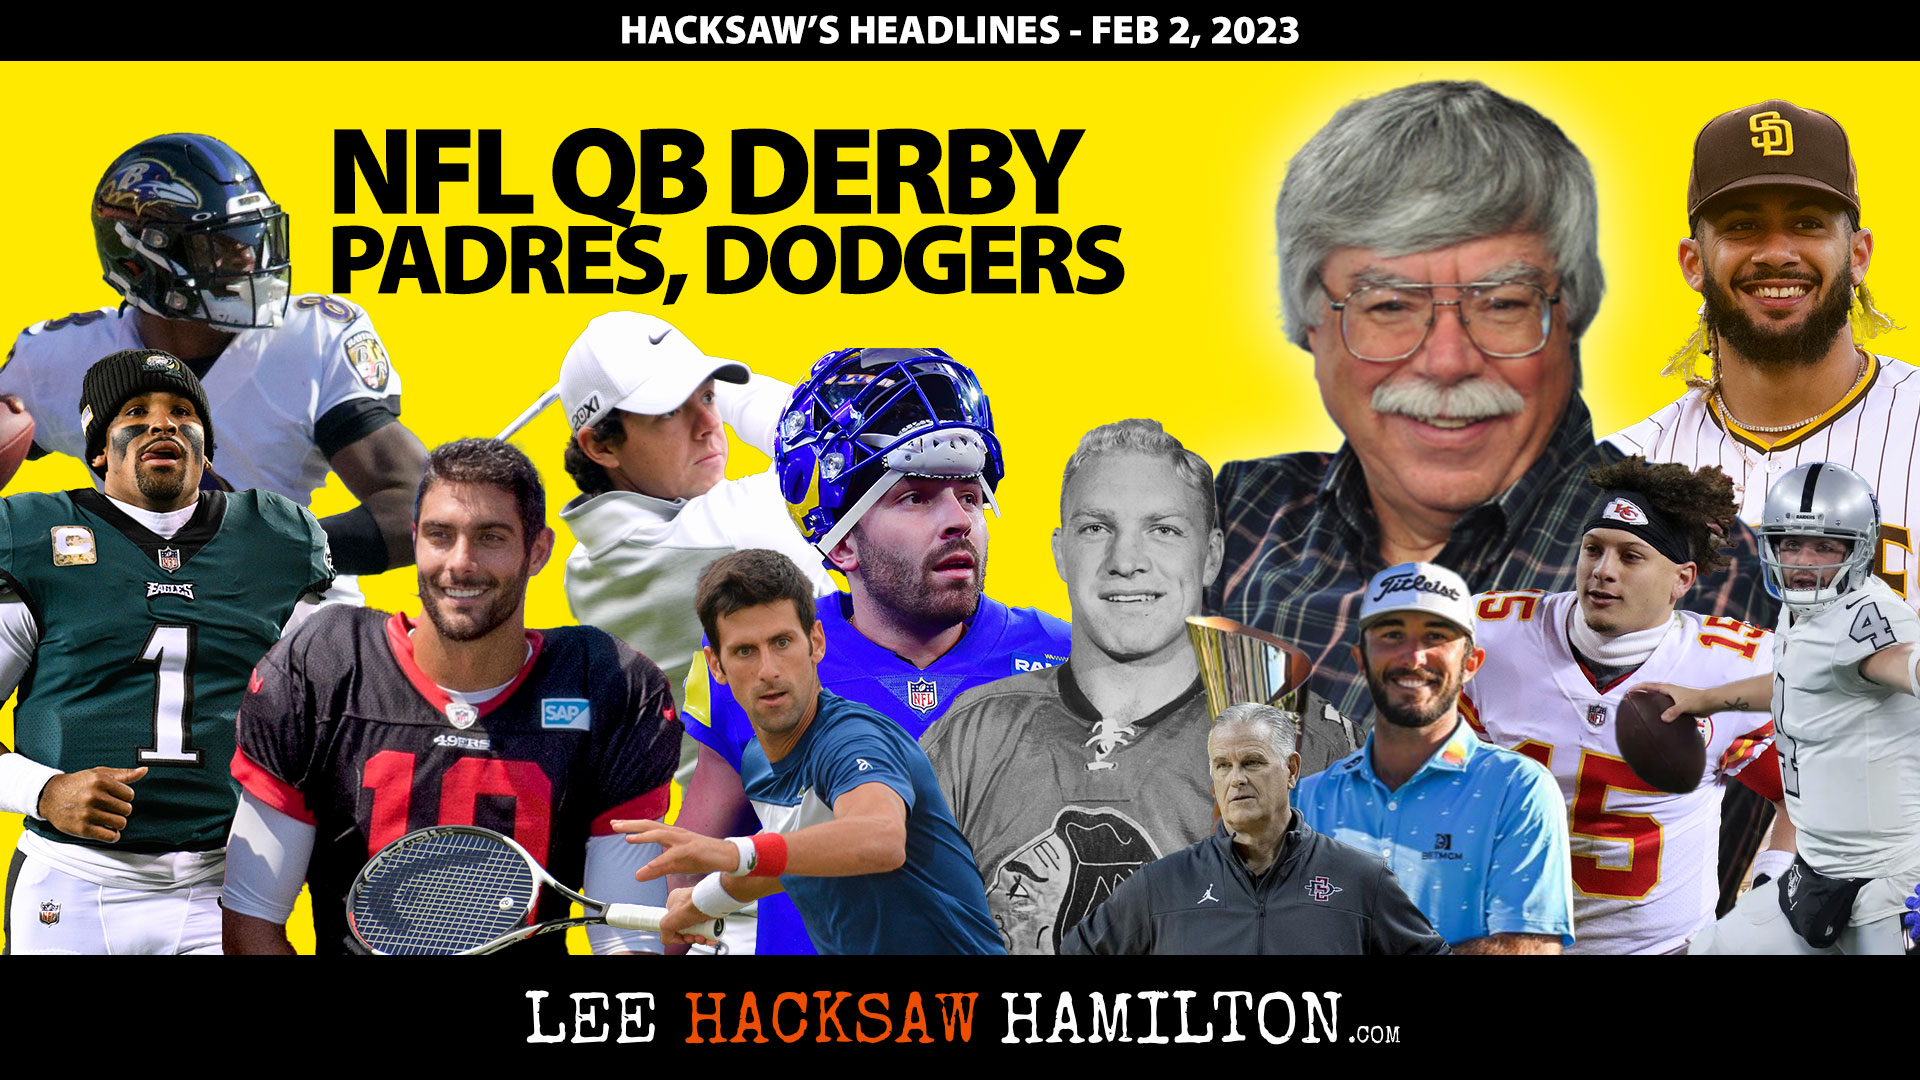 NFL QB Derby, NFL Salary Cap, Fernando Tatis Jr., Padres, Dodgers, Lee Hacksaw Hamilton